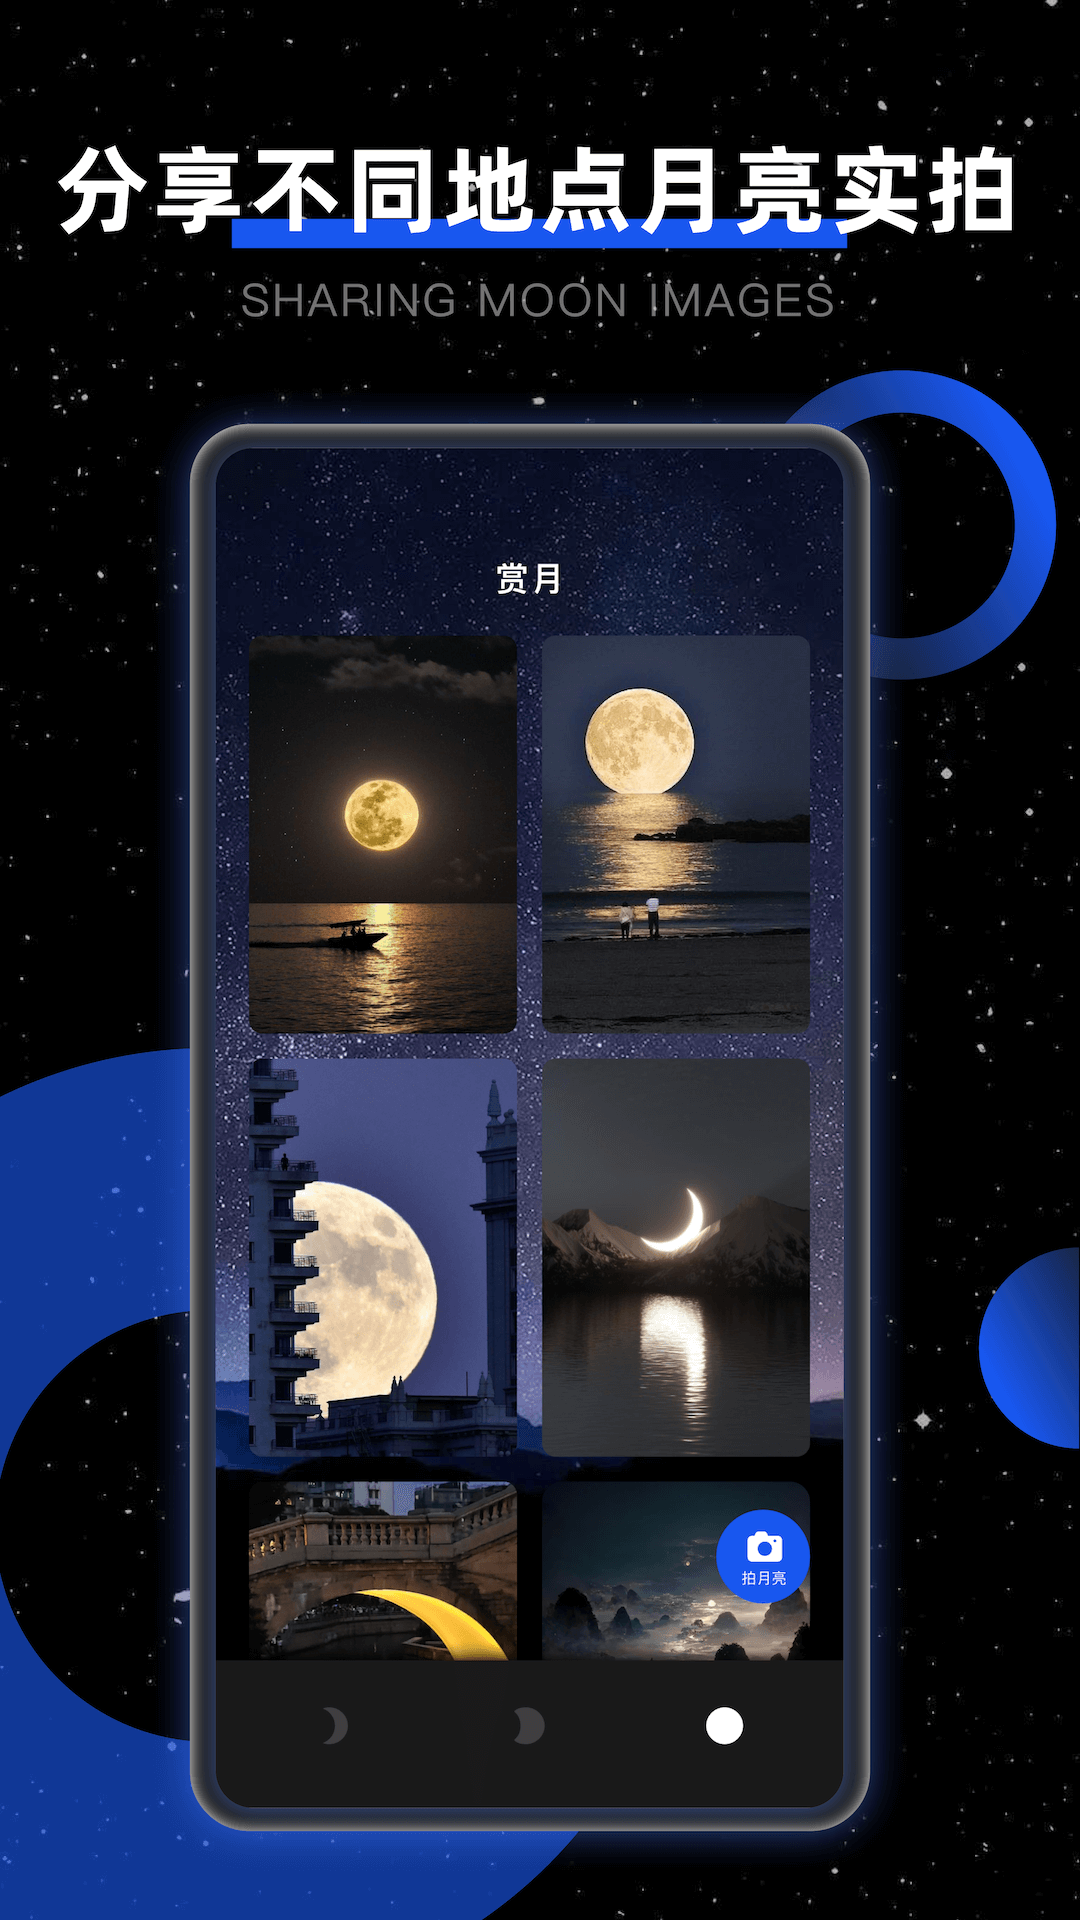 Moon app